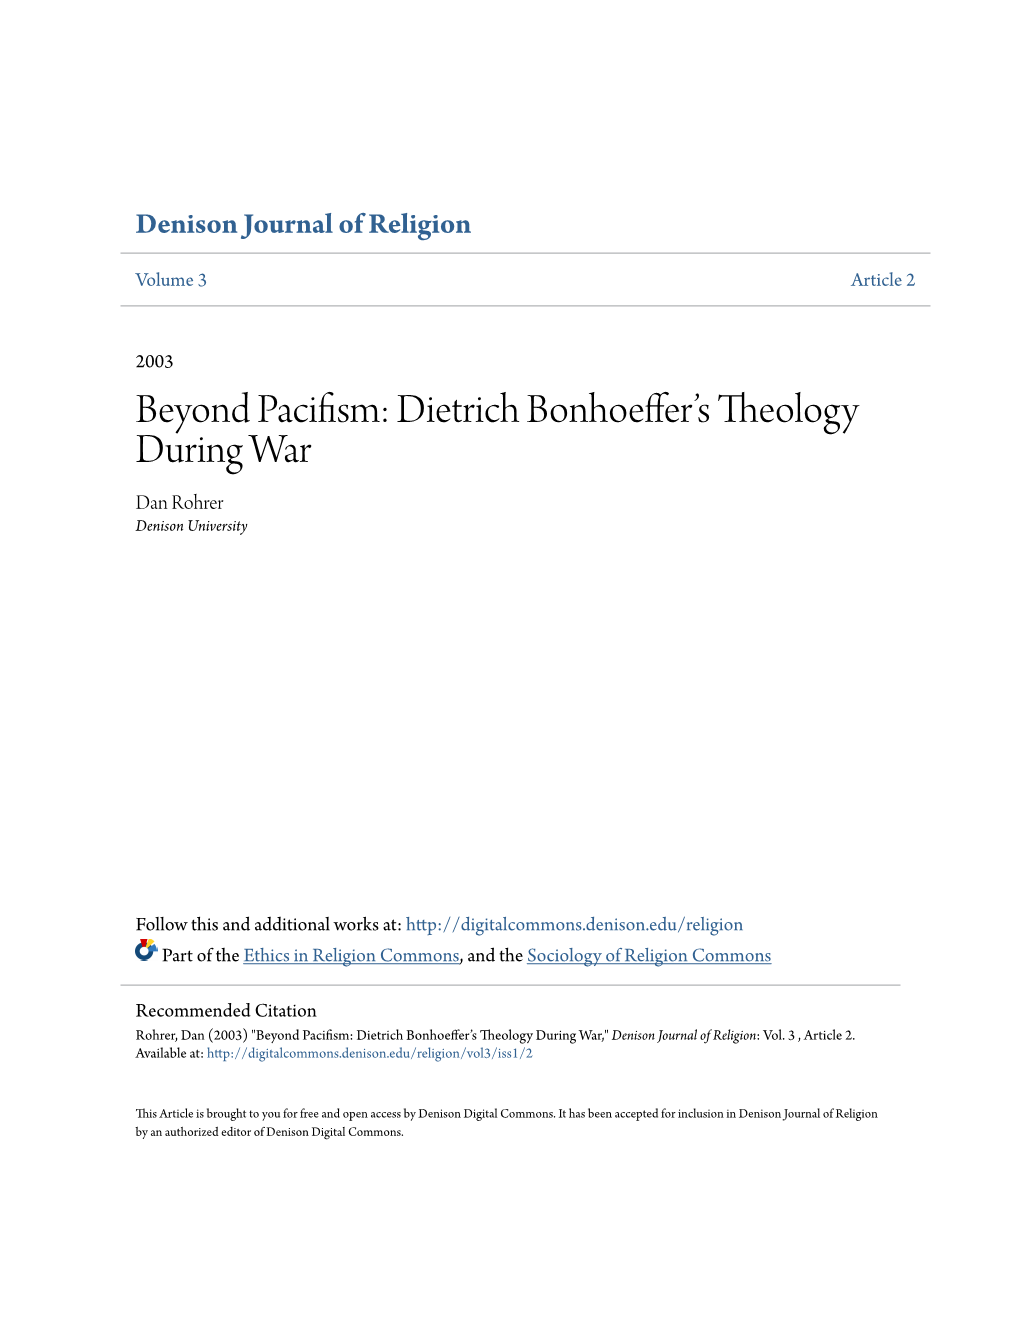 Dietrich Bonhoeffer's Theology During